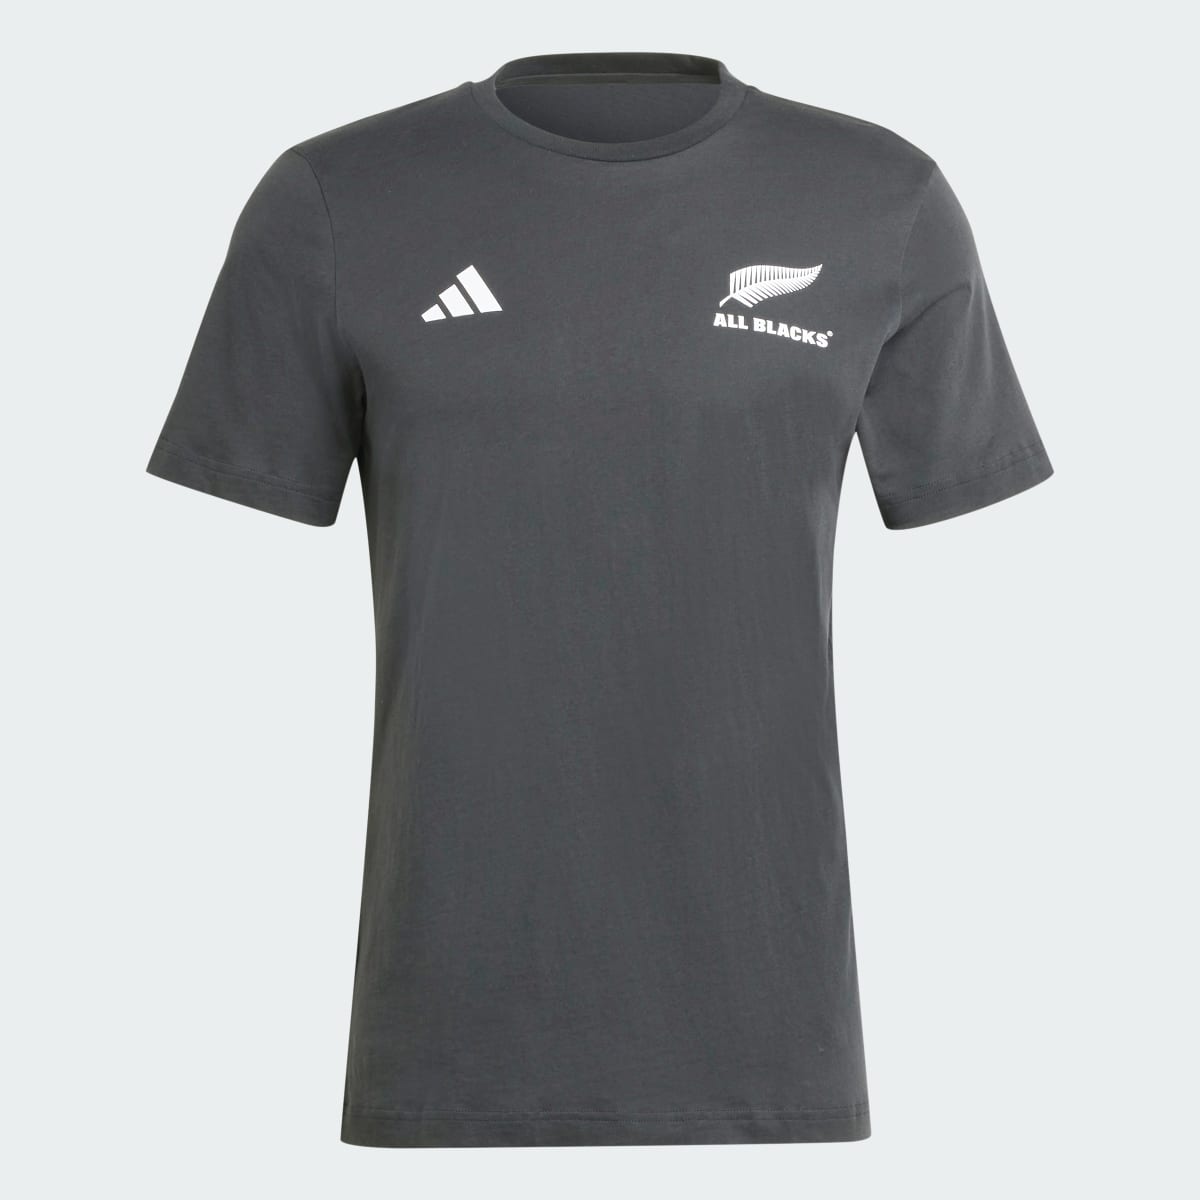 Adidas All Blacks Rugby Cotton Tee. 6